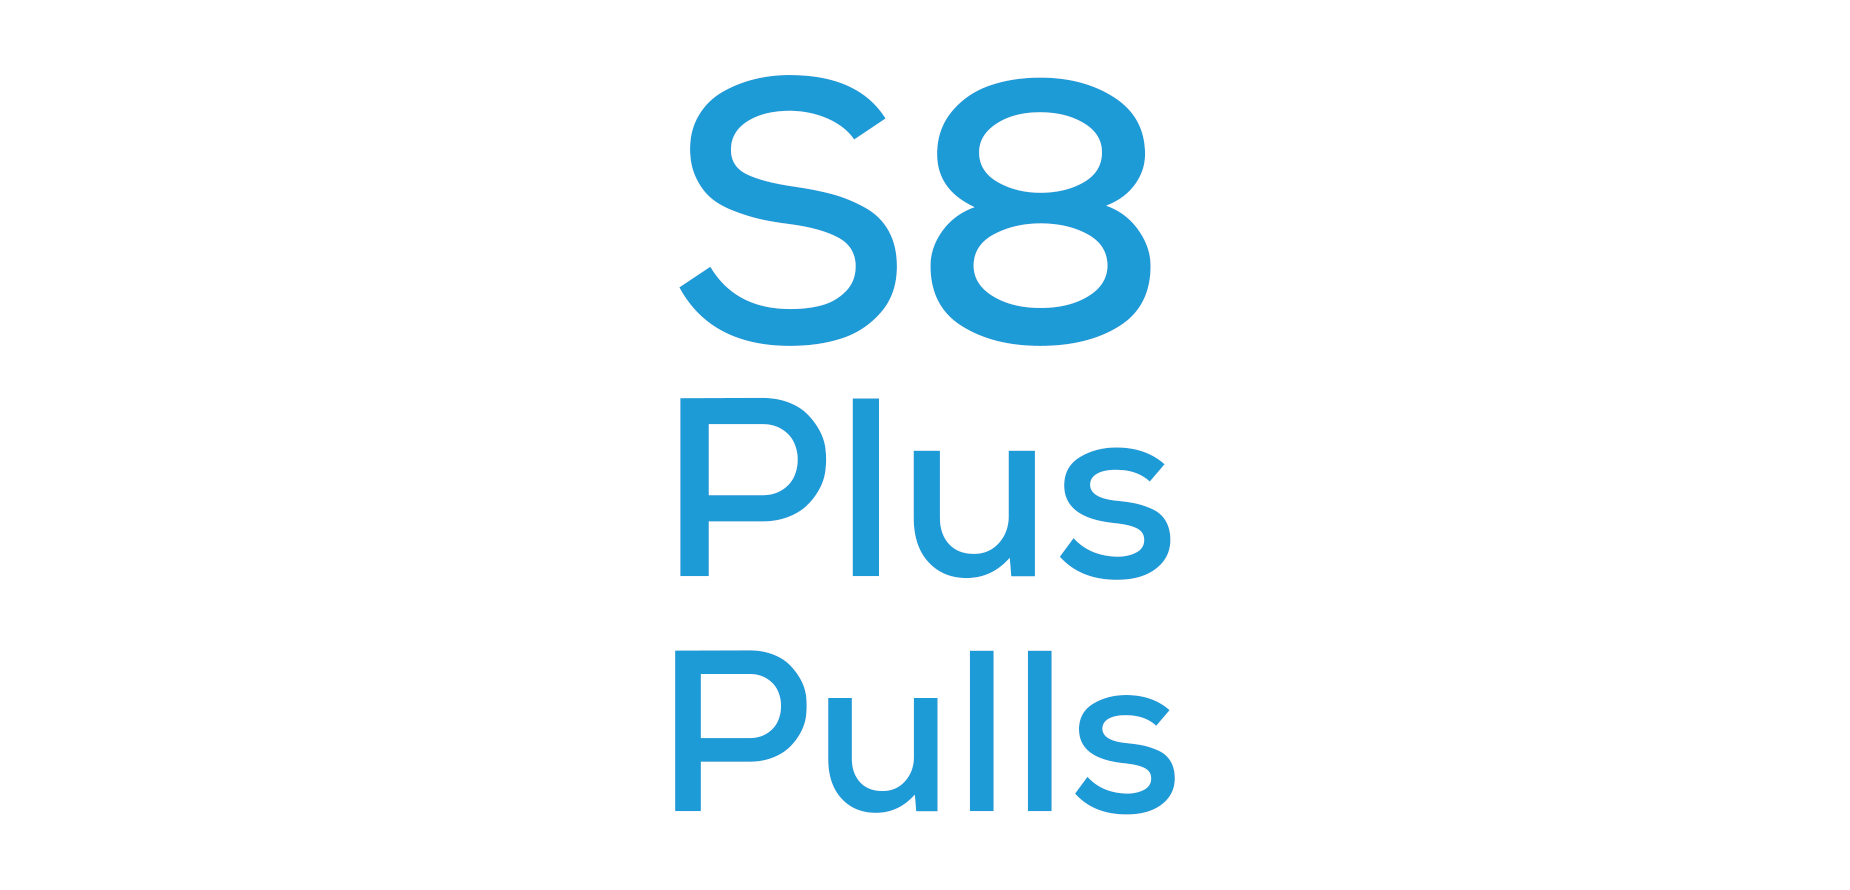 Galaxy S8 Plus Pulls